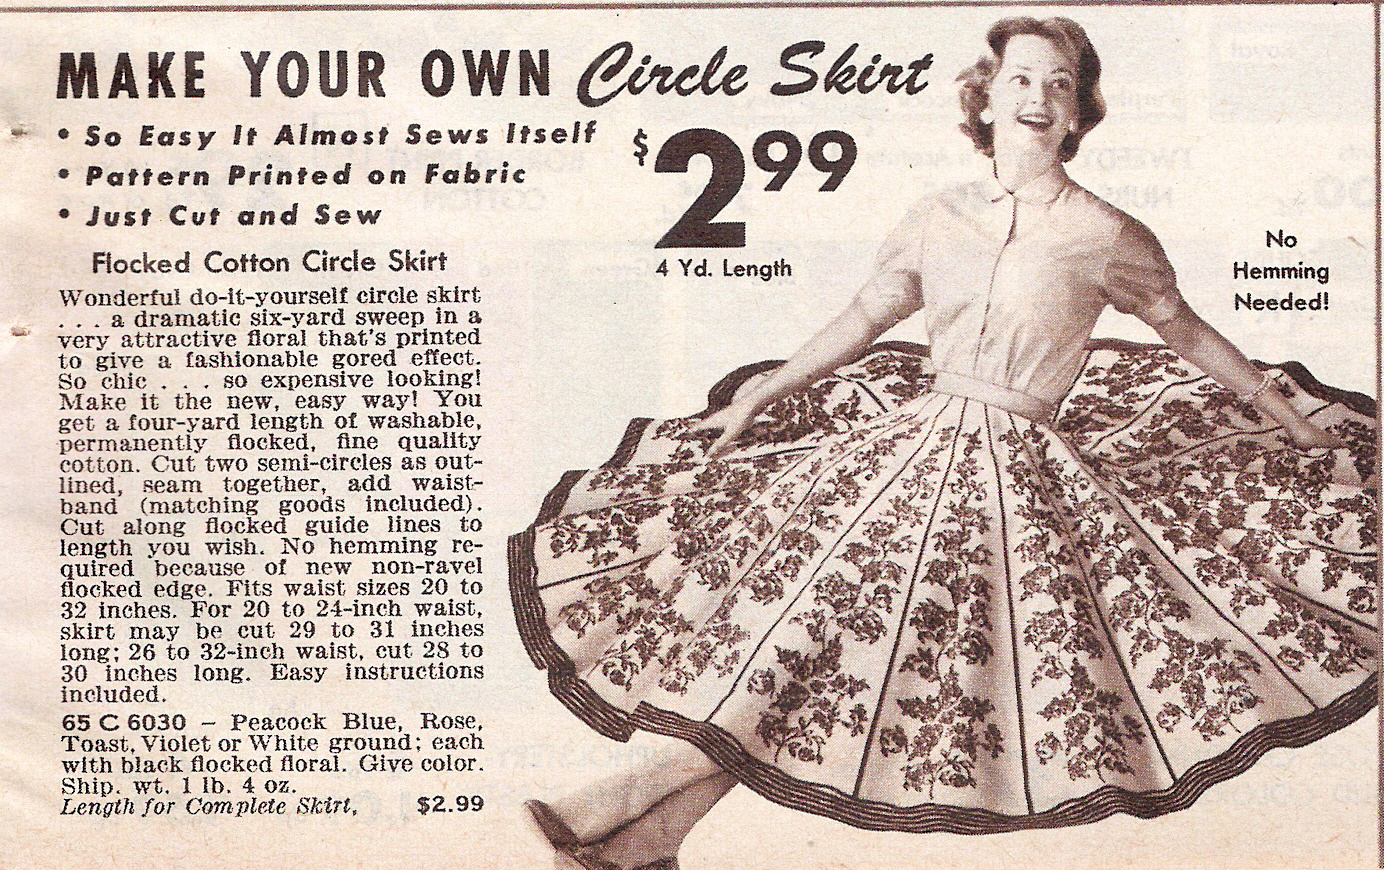 Make your own 1950s circle skirt ad. Read more at VintageDancer.com